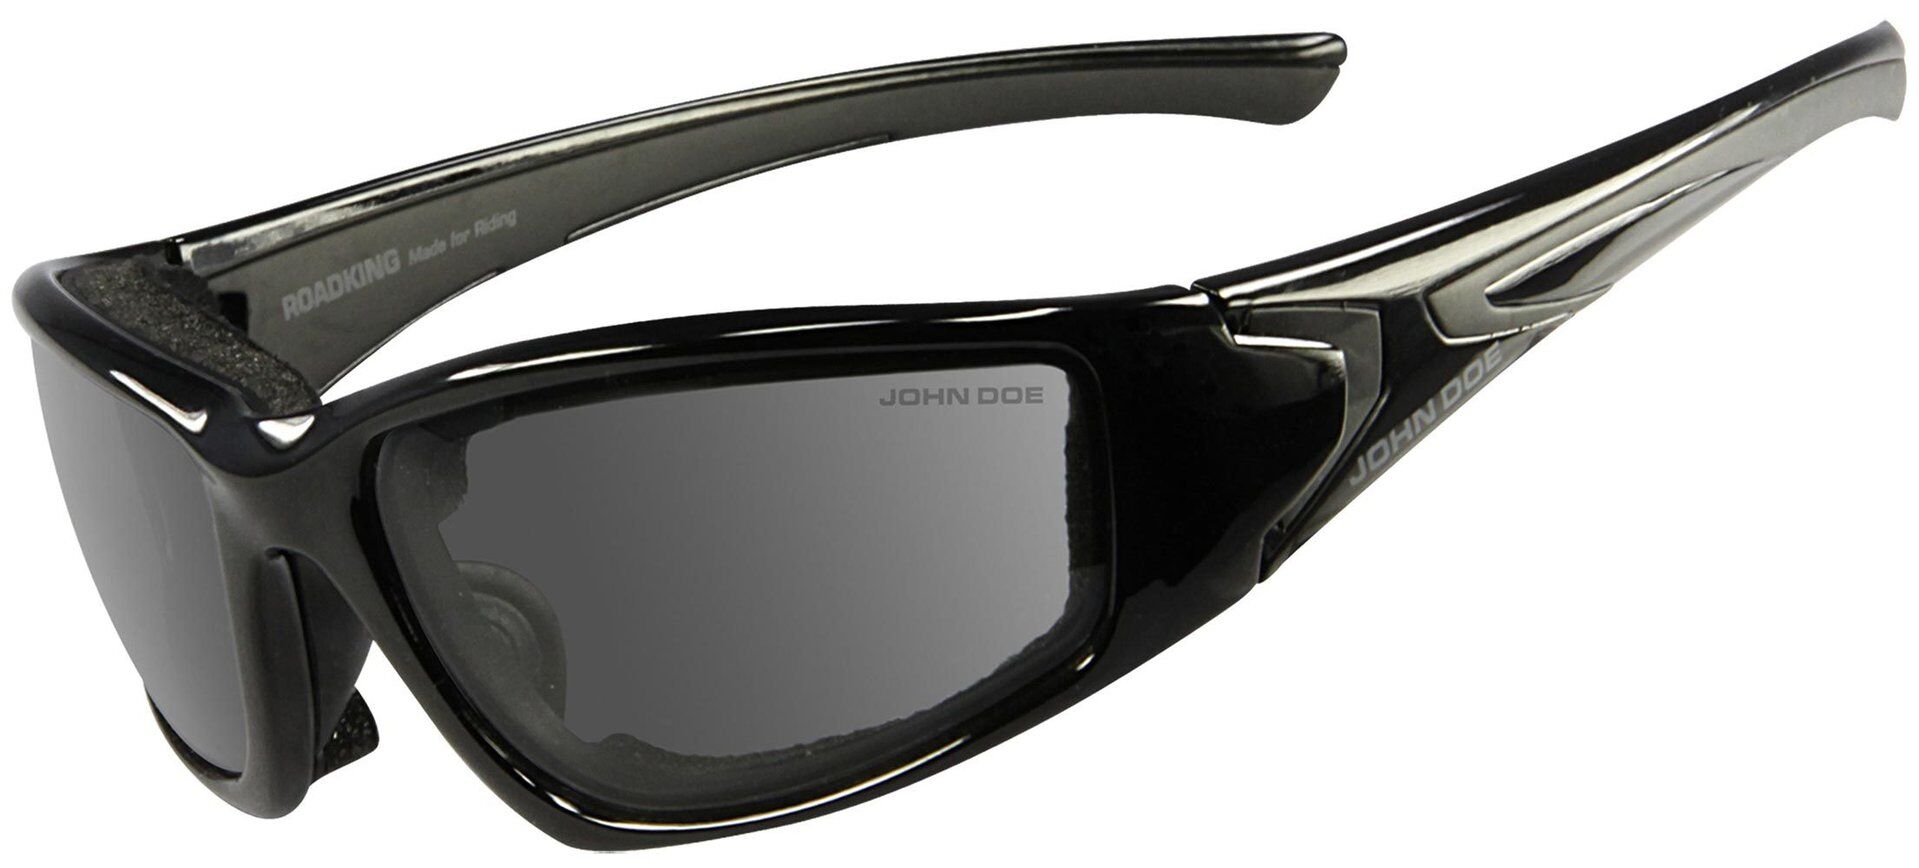 John Doe Roadking Photocromatic Gafas de sol - Negro (un tamaño)